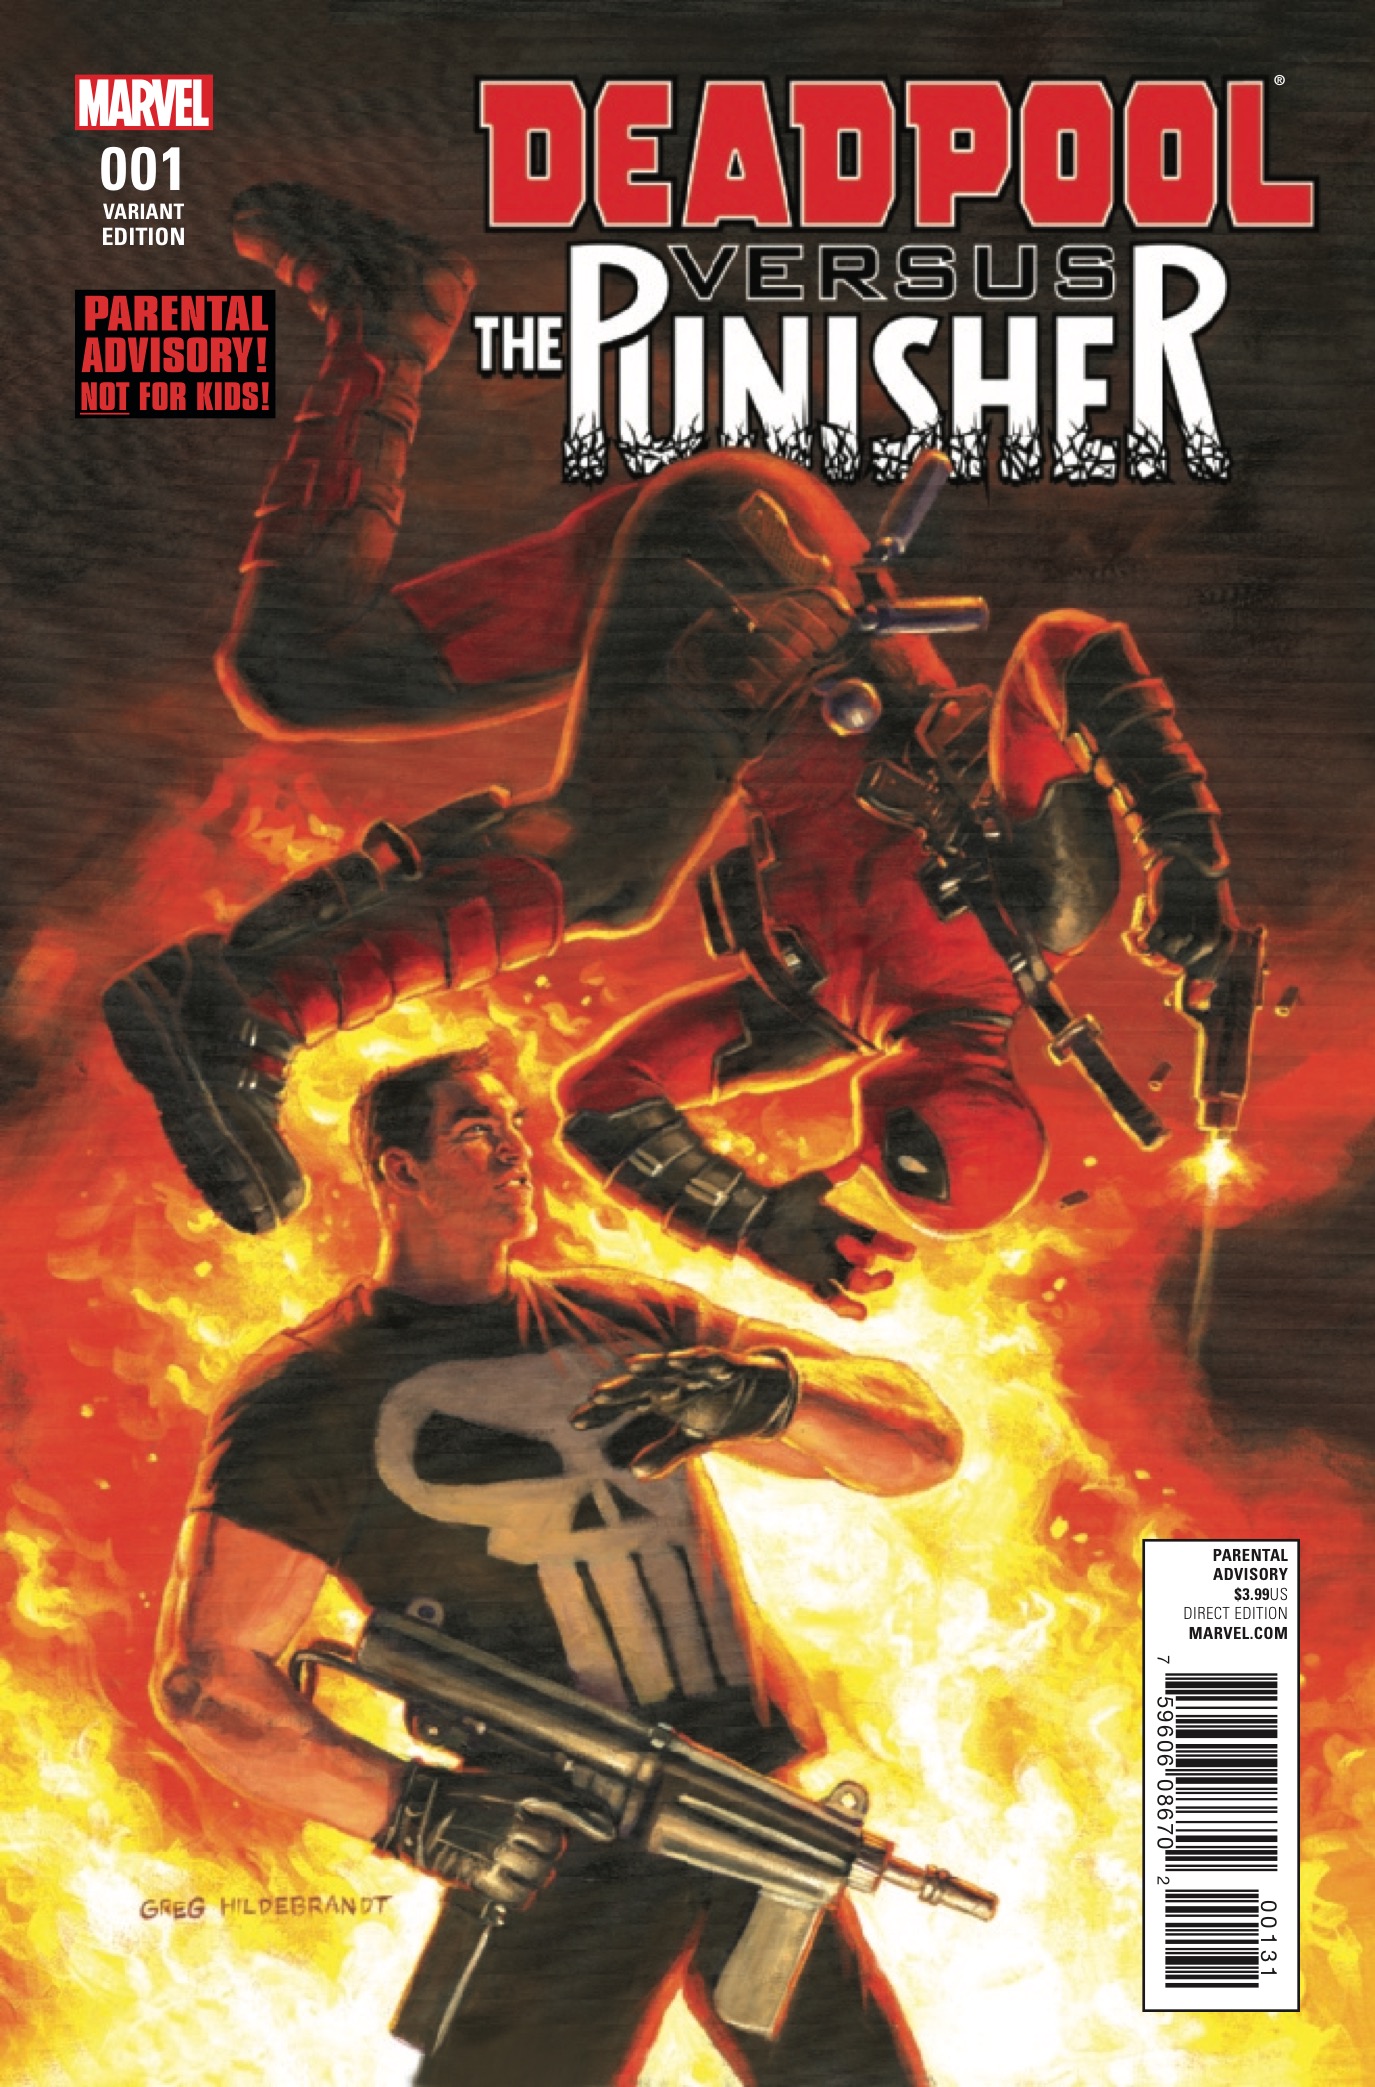 Deadpool vs. The Punisher #1 Review